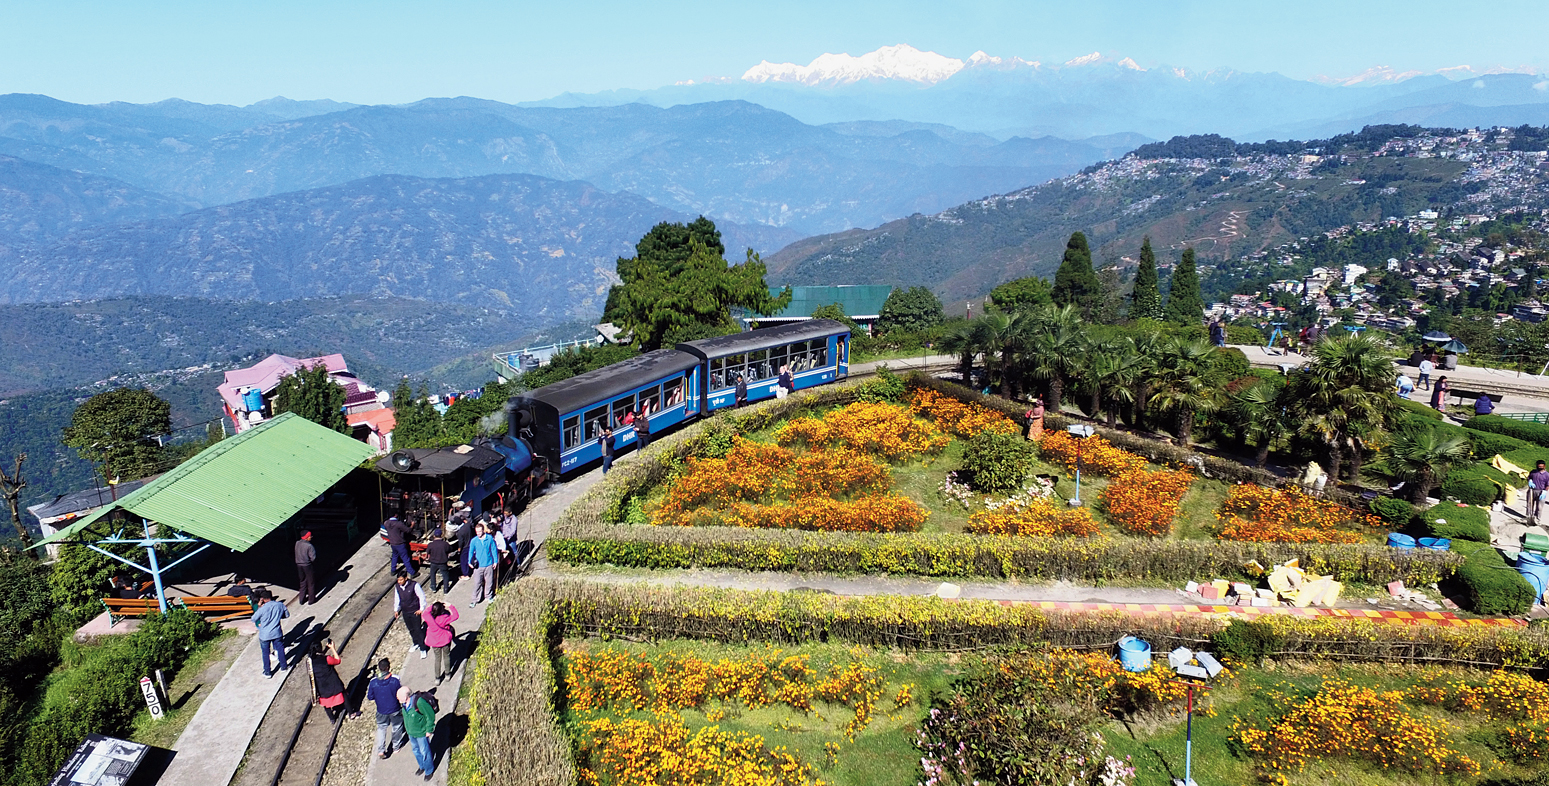 A toy train passes through Batasia Loop in Darjeeling